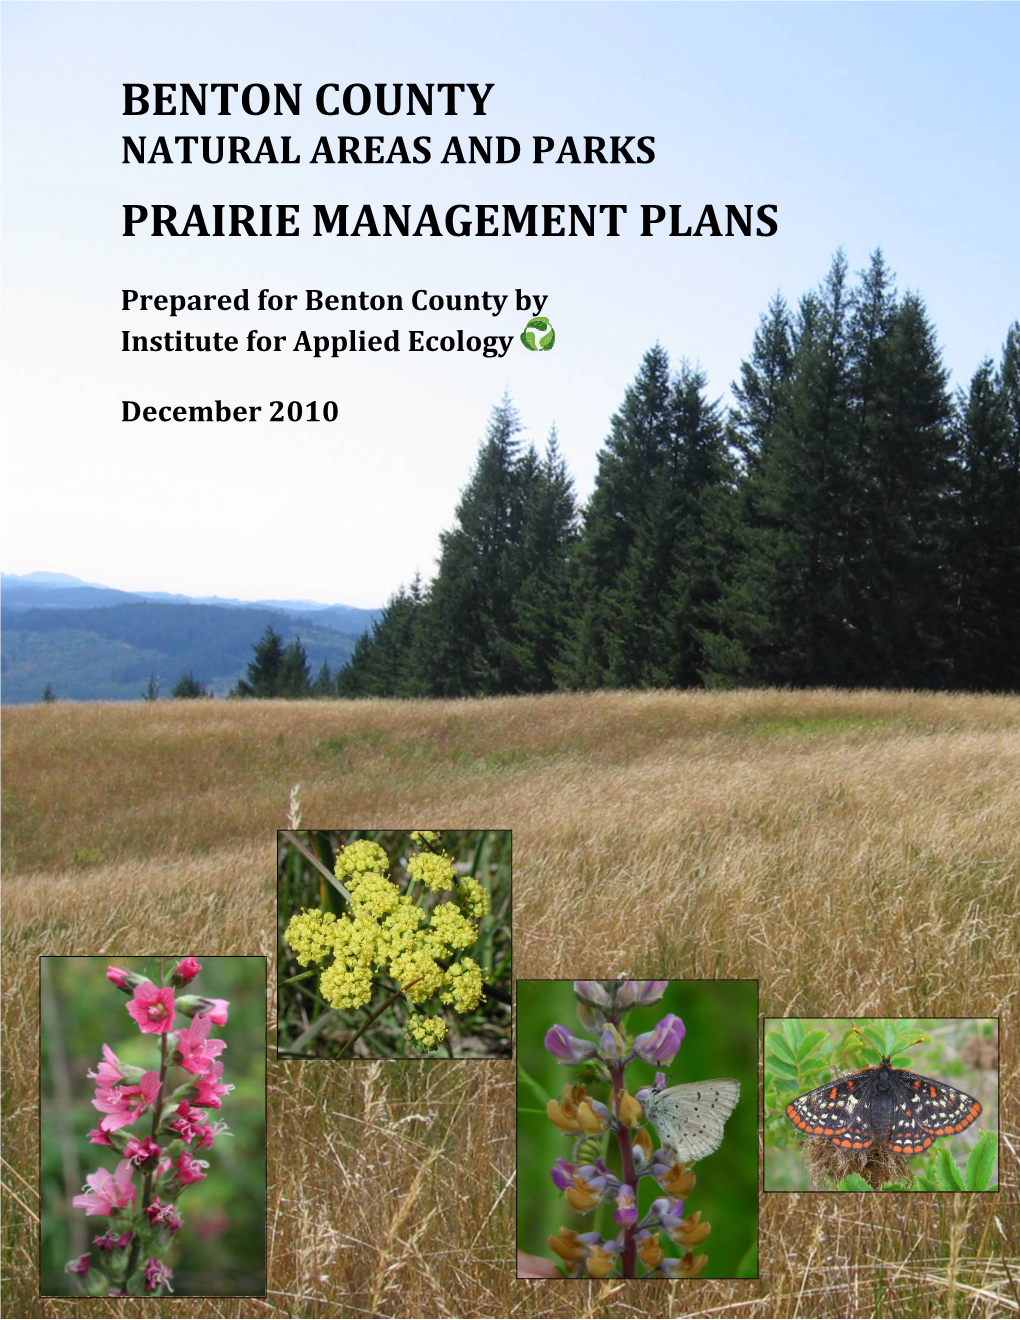 Benton County Prairie Management Plans: References REFERENCES Bartels, M